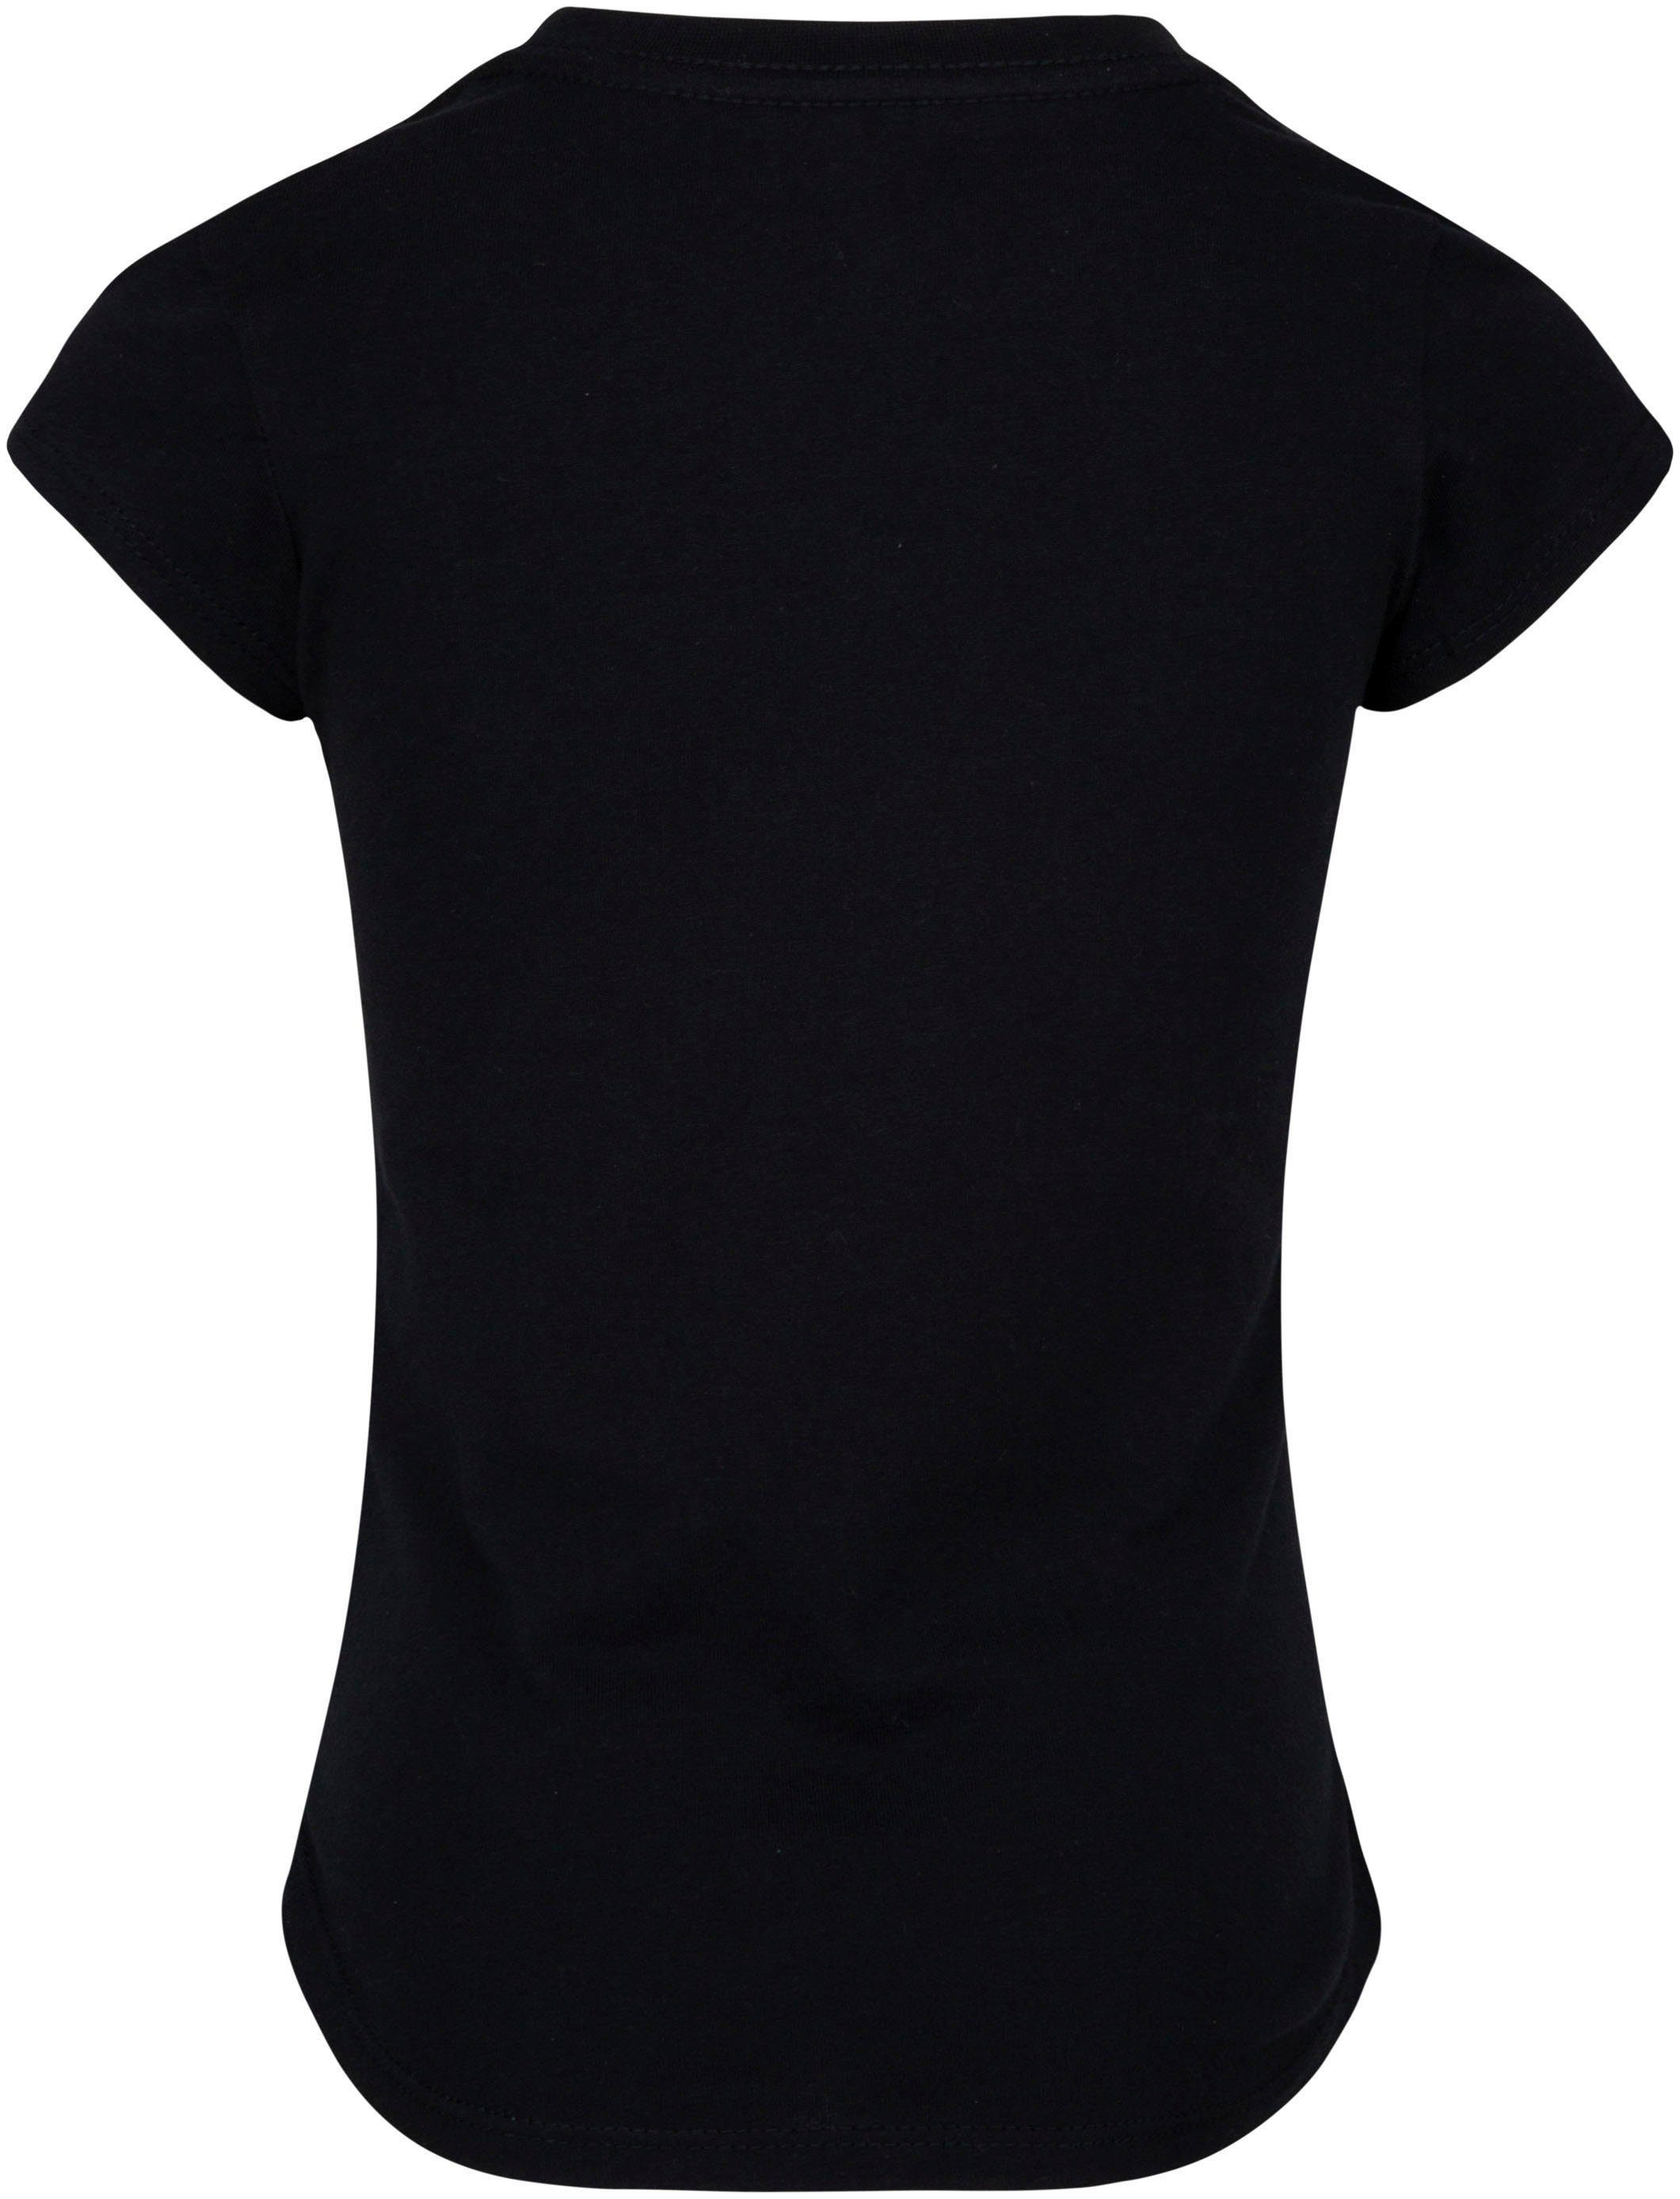 schwarz SHORT für FUTURA T-Shirt Nike TEE - SLEEVE Sportswear Kinder NIKE